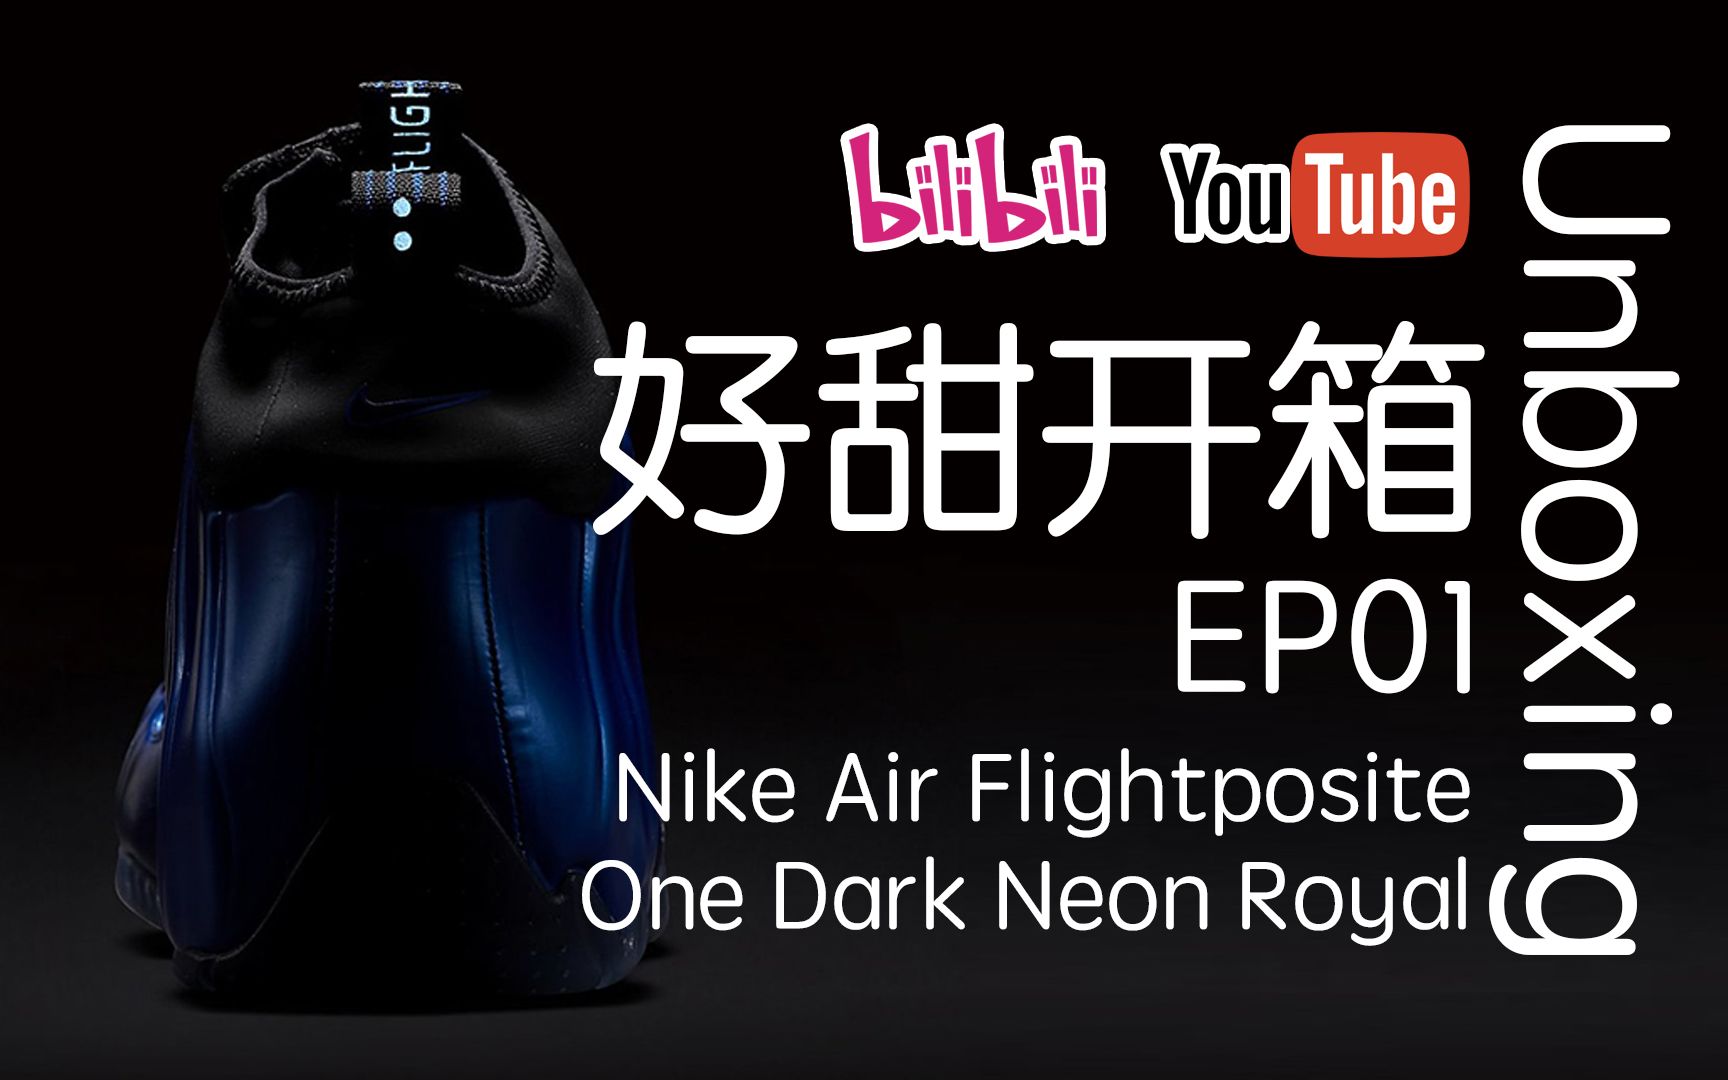 air flightposite one dark neon royal